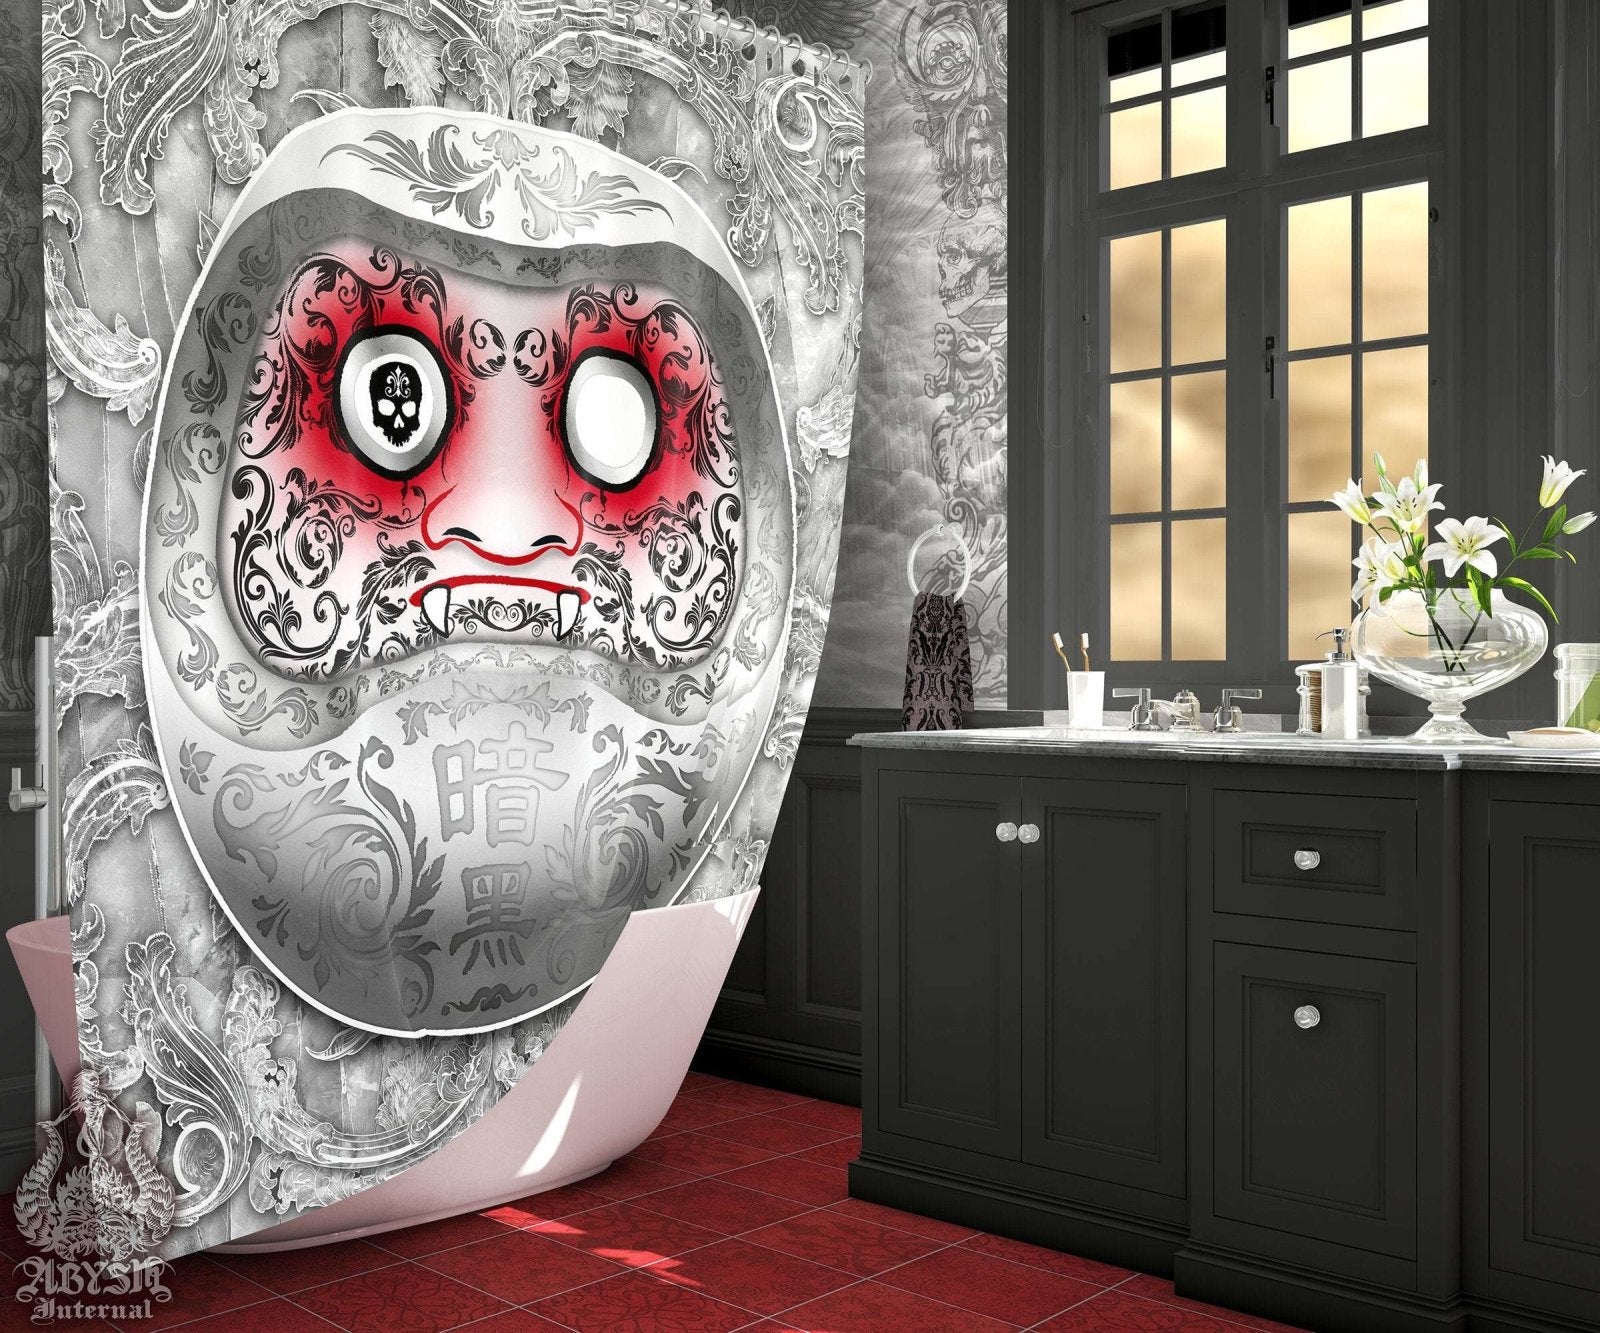 Anime Shower Curtain, Alternative Bathroom Decor, Funny Japanese Daruma - White Goth - Abysm Internal